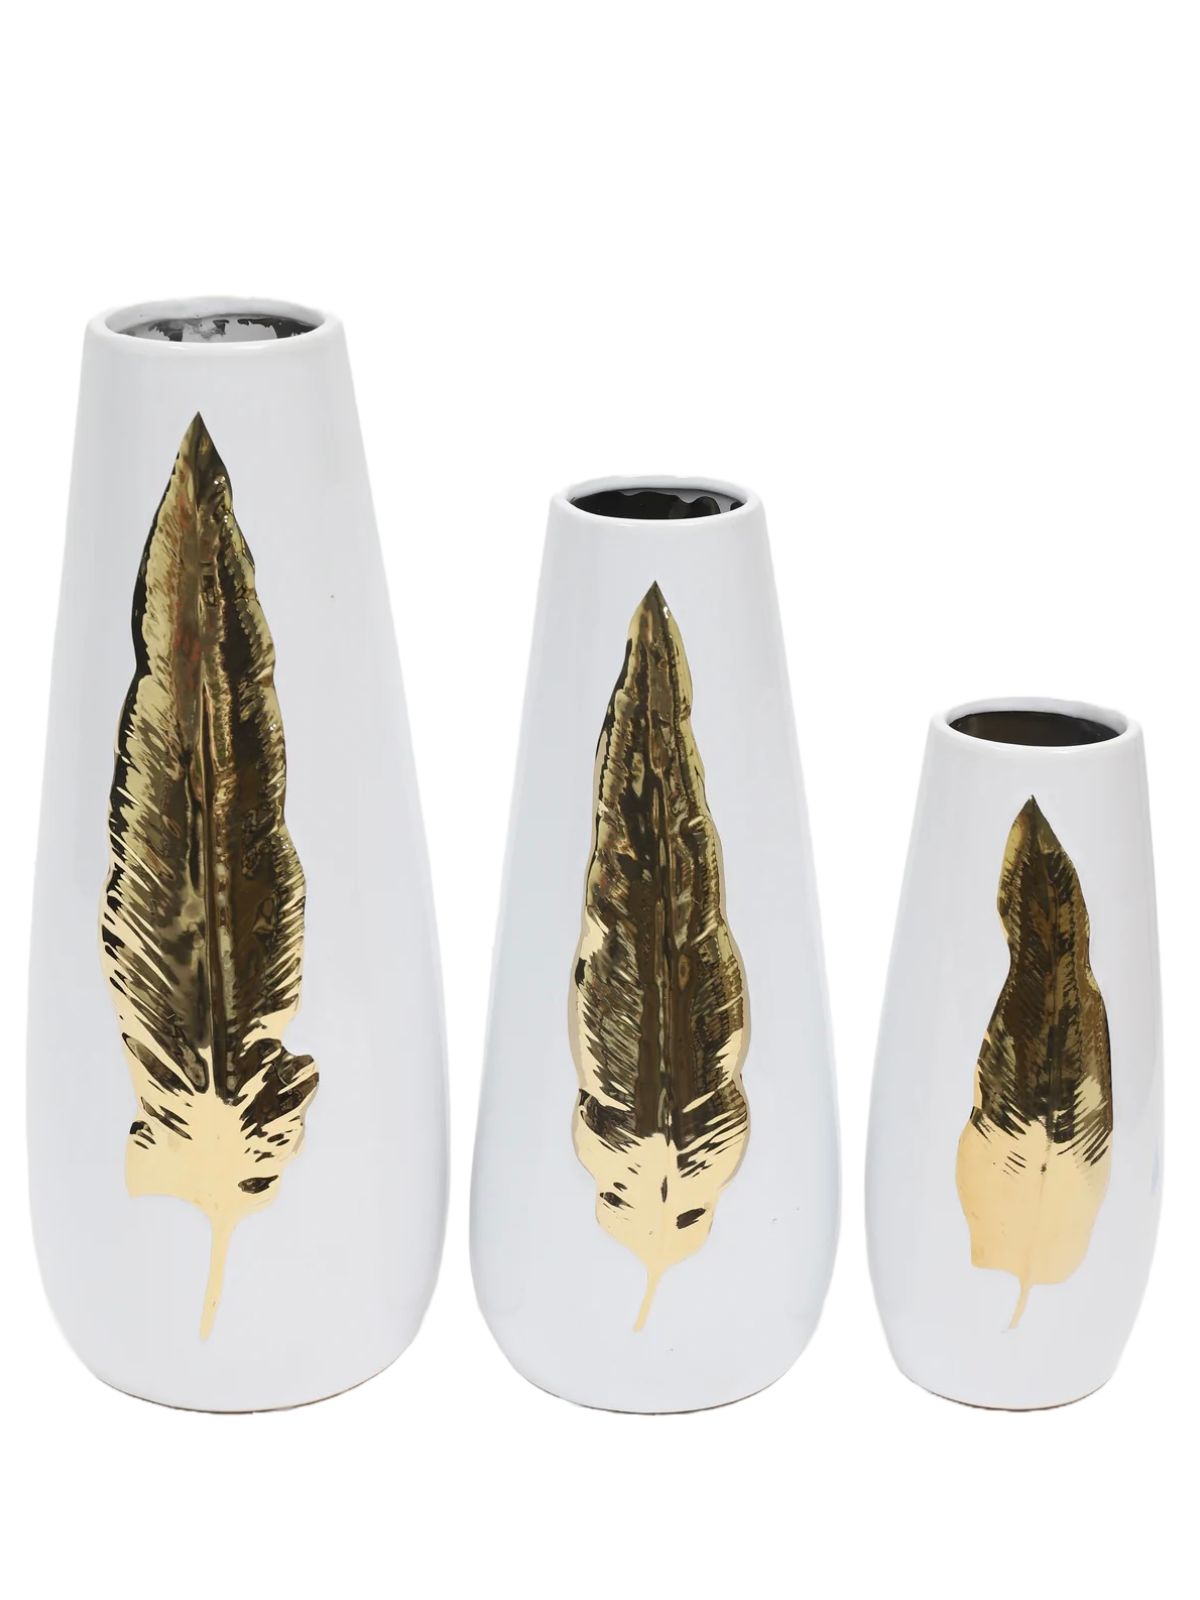 Luxury White Ceramic Decorative Vase with Gold Leaf Design, 3 Sizes - KYA Home Decor